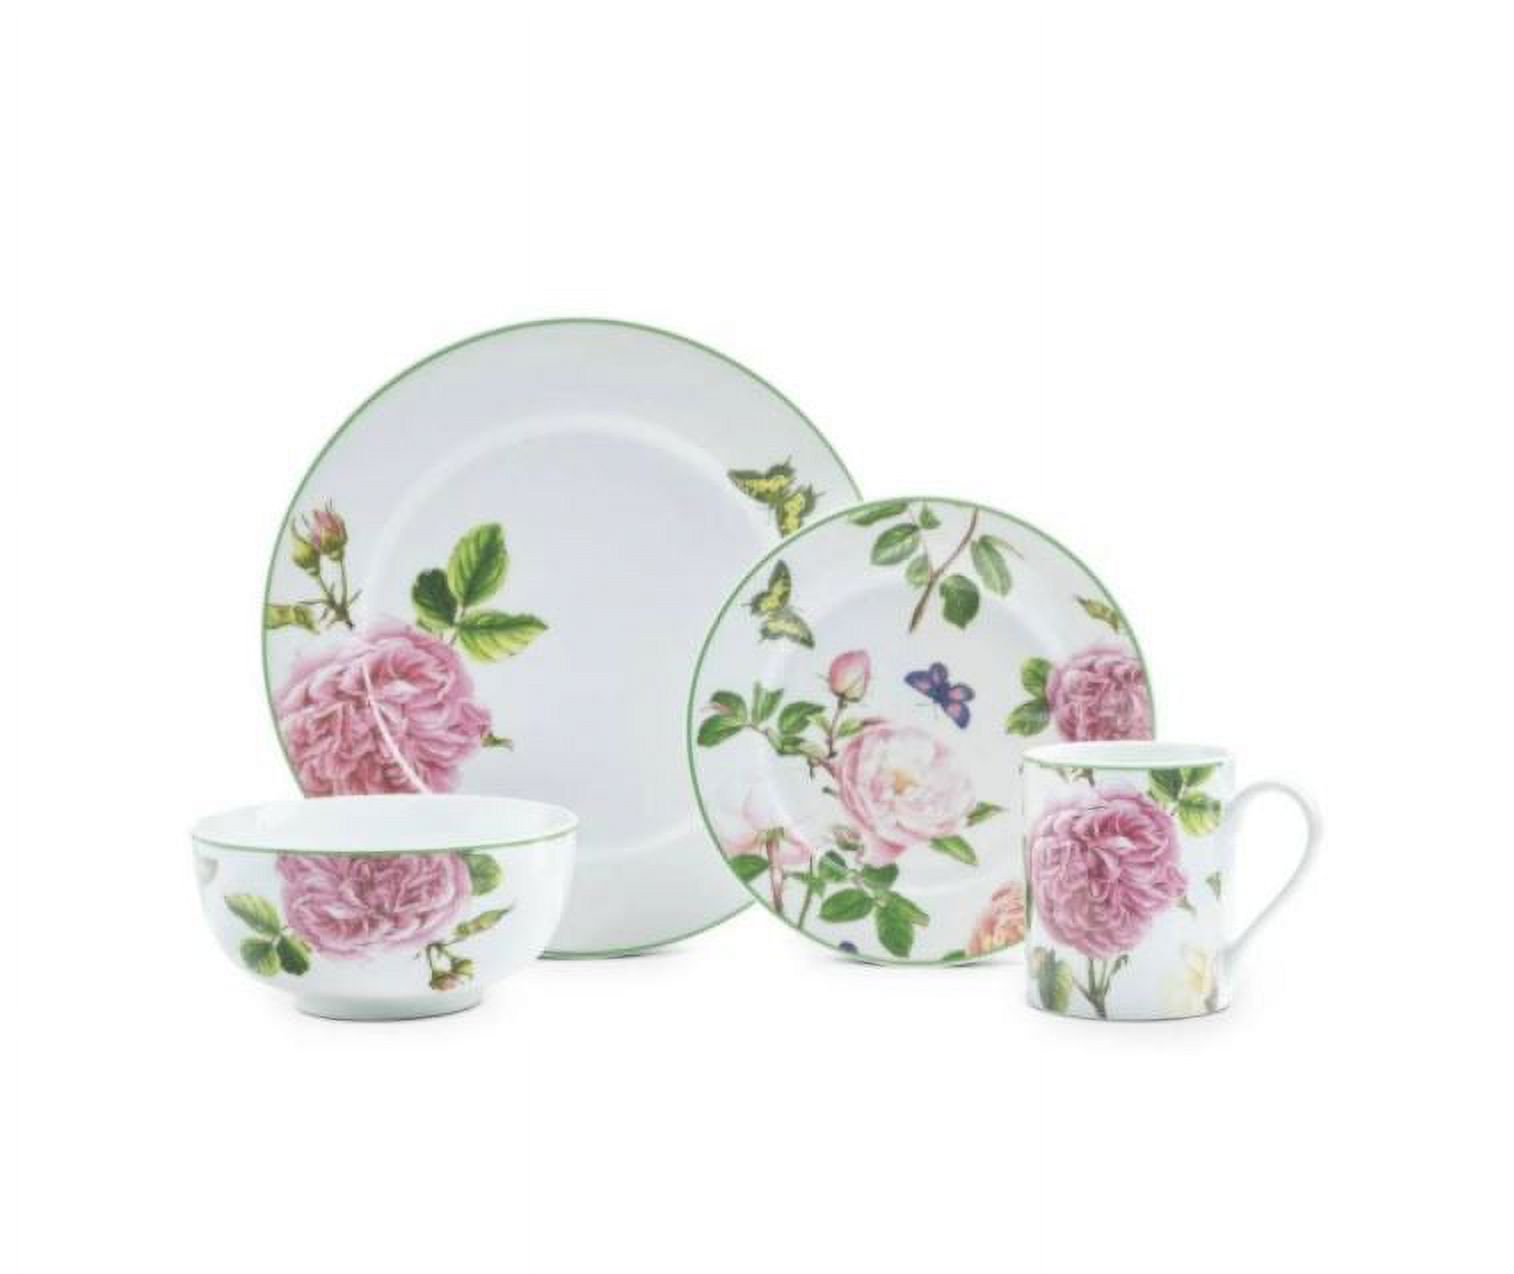 Spode Home Roses 16 Piece Dinnerware Set, Service for 4, Made of Fine Porcelain, Dishwasher Safe - image 2 of 5